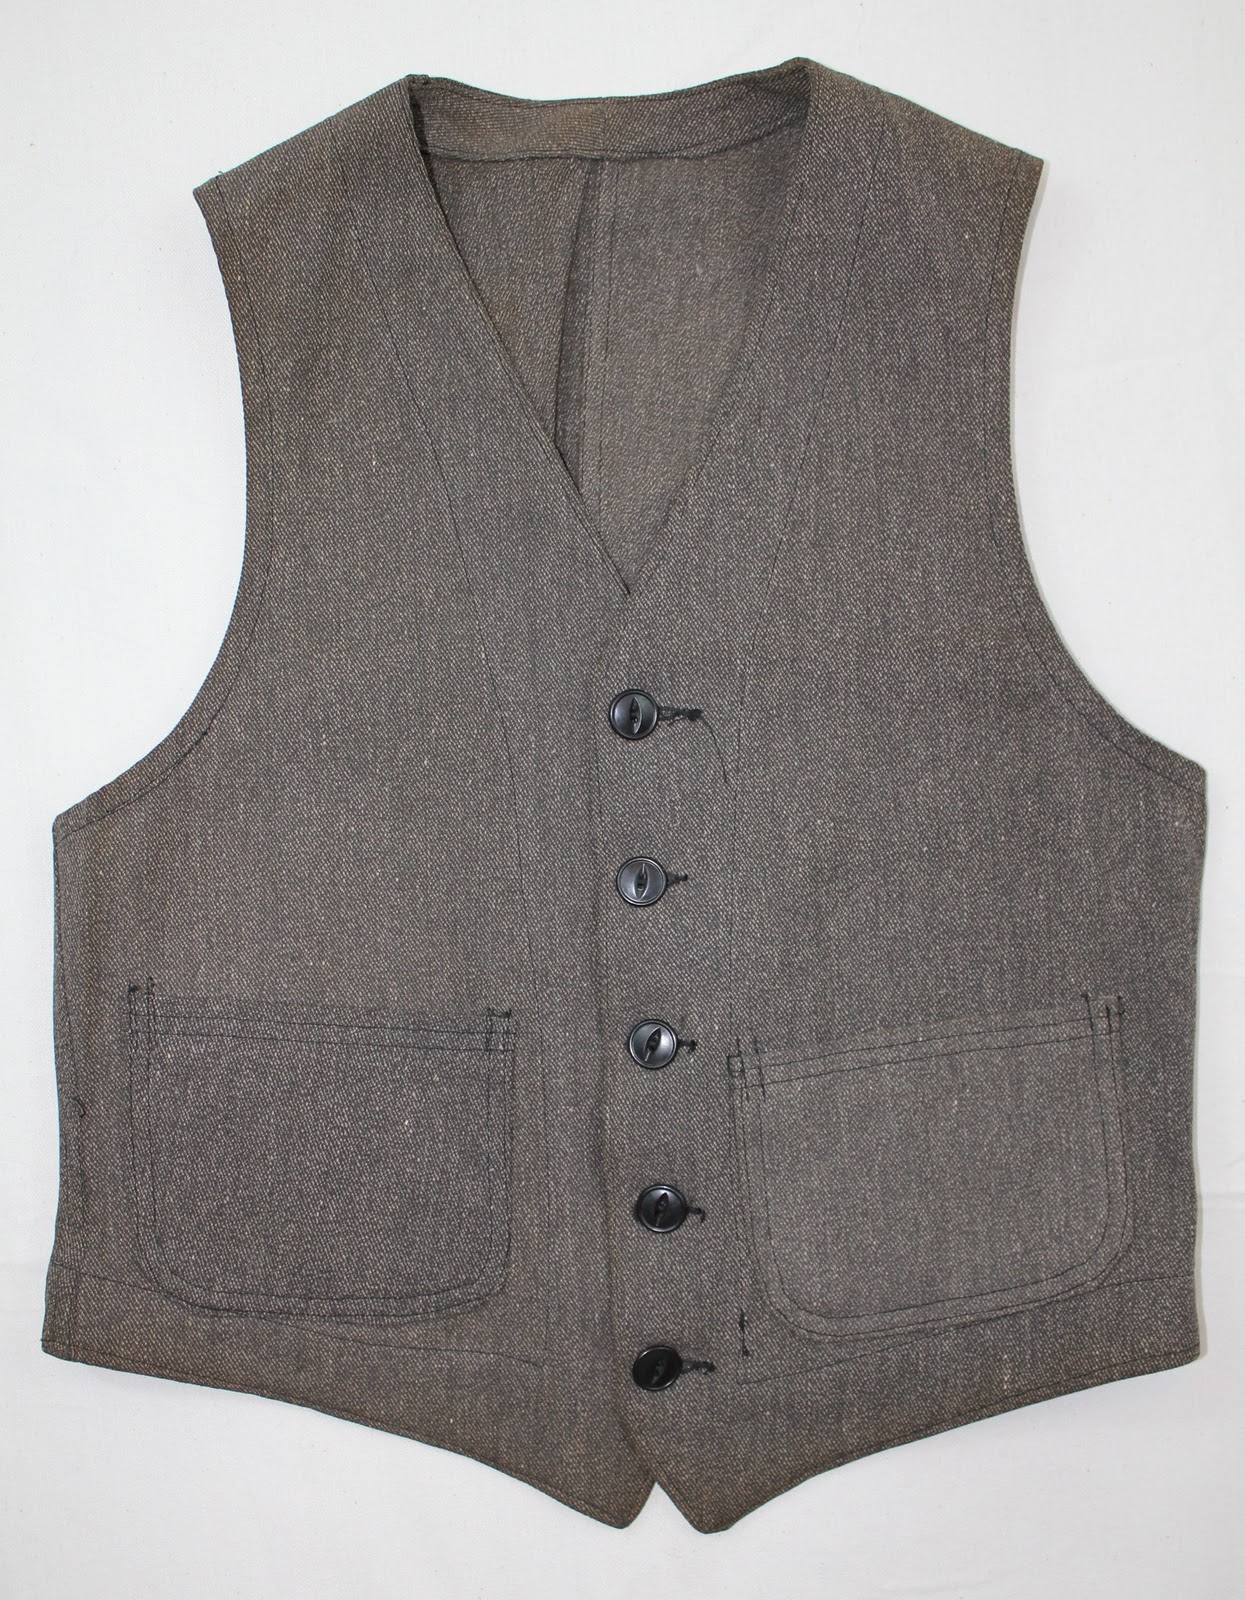 vintage workwear: 1940's Era Salt & Pepper Whipcord Work Vest